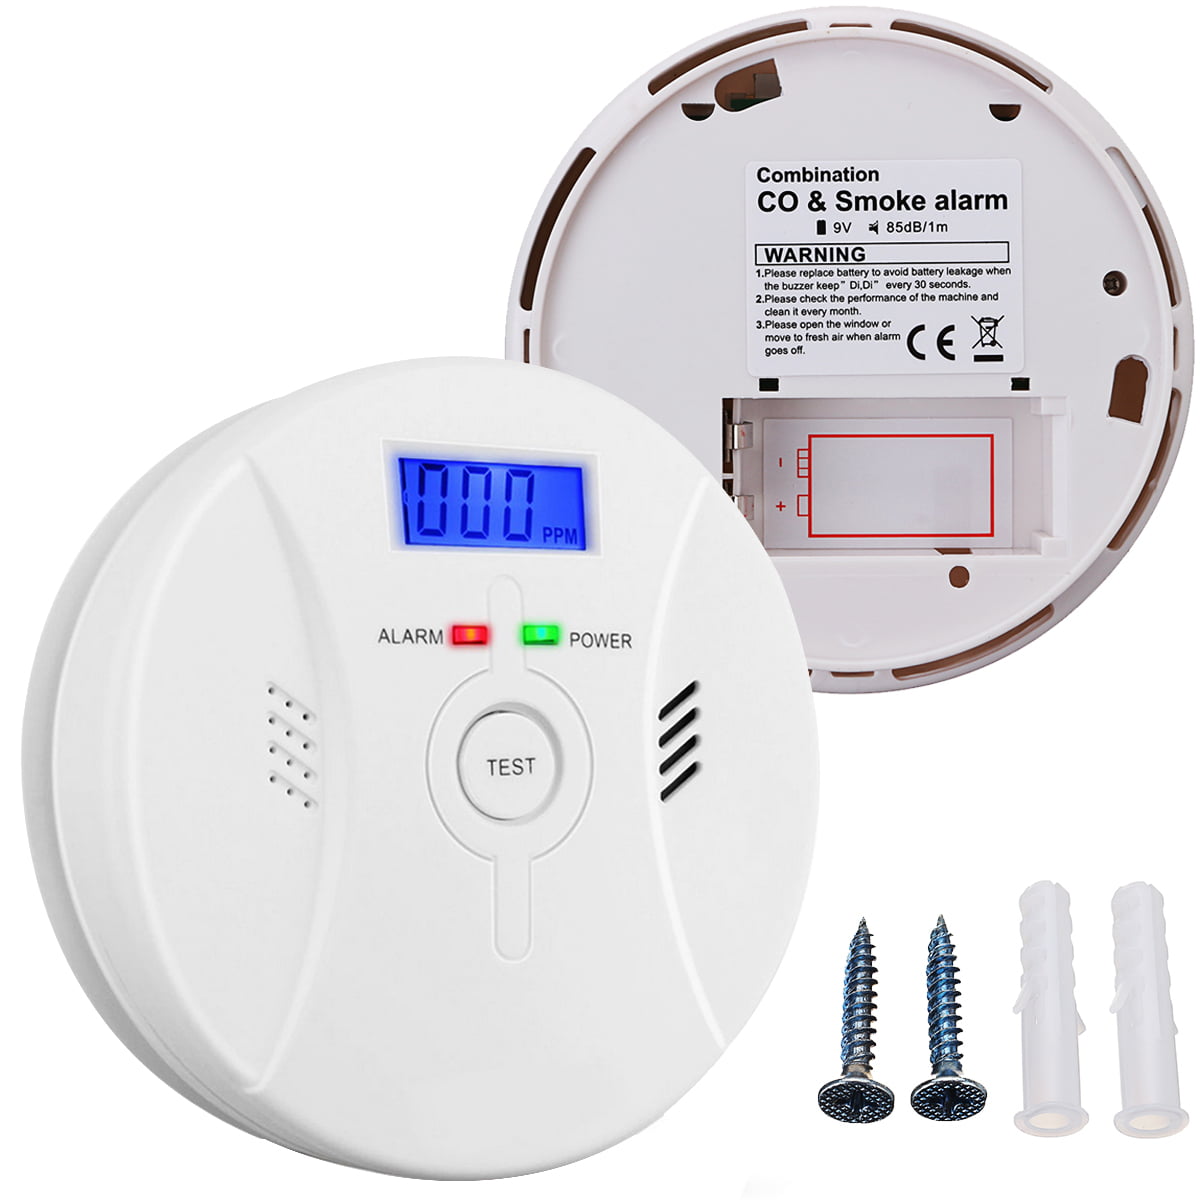 How can I get a free carbon monoxide detector 2020?